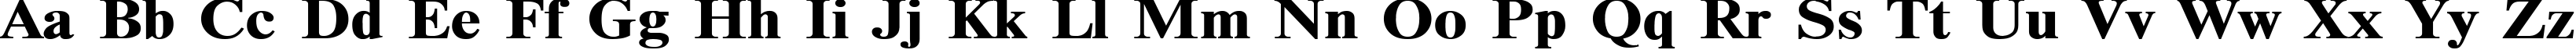 Пример написания английского алфавита шрифтом TimesET120b